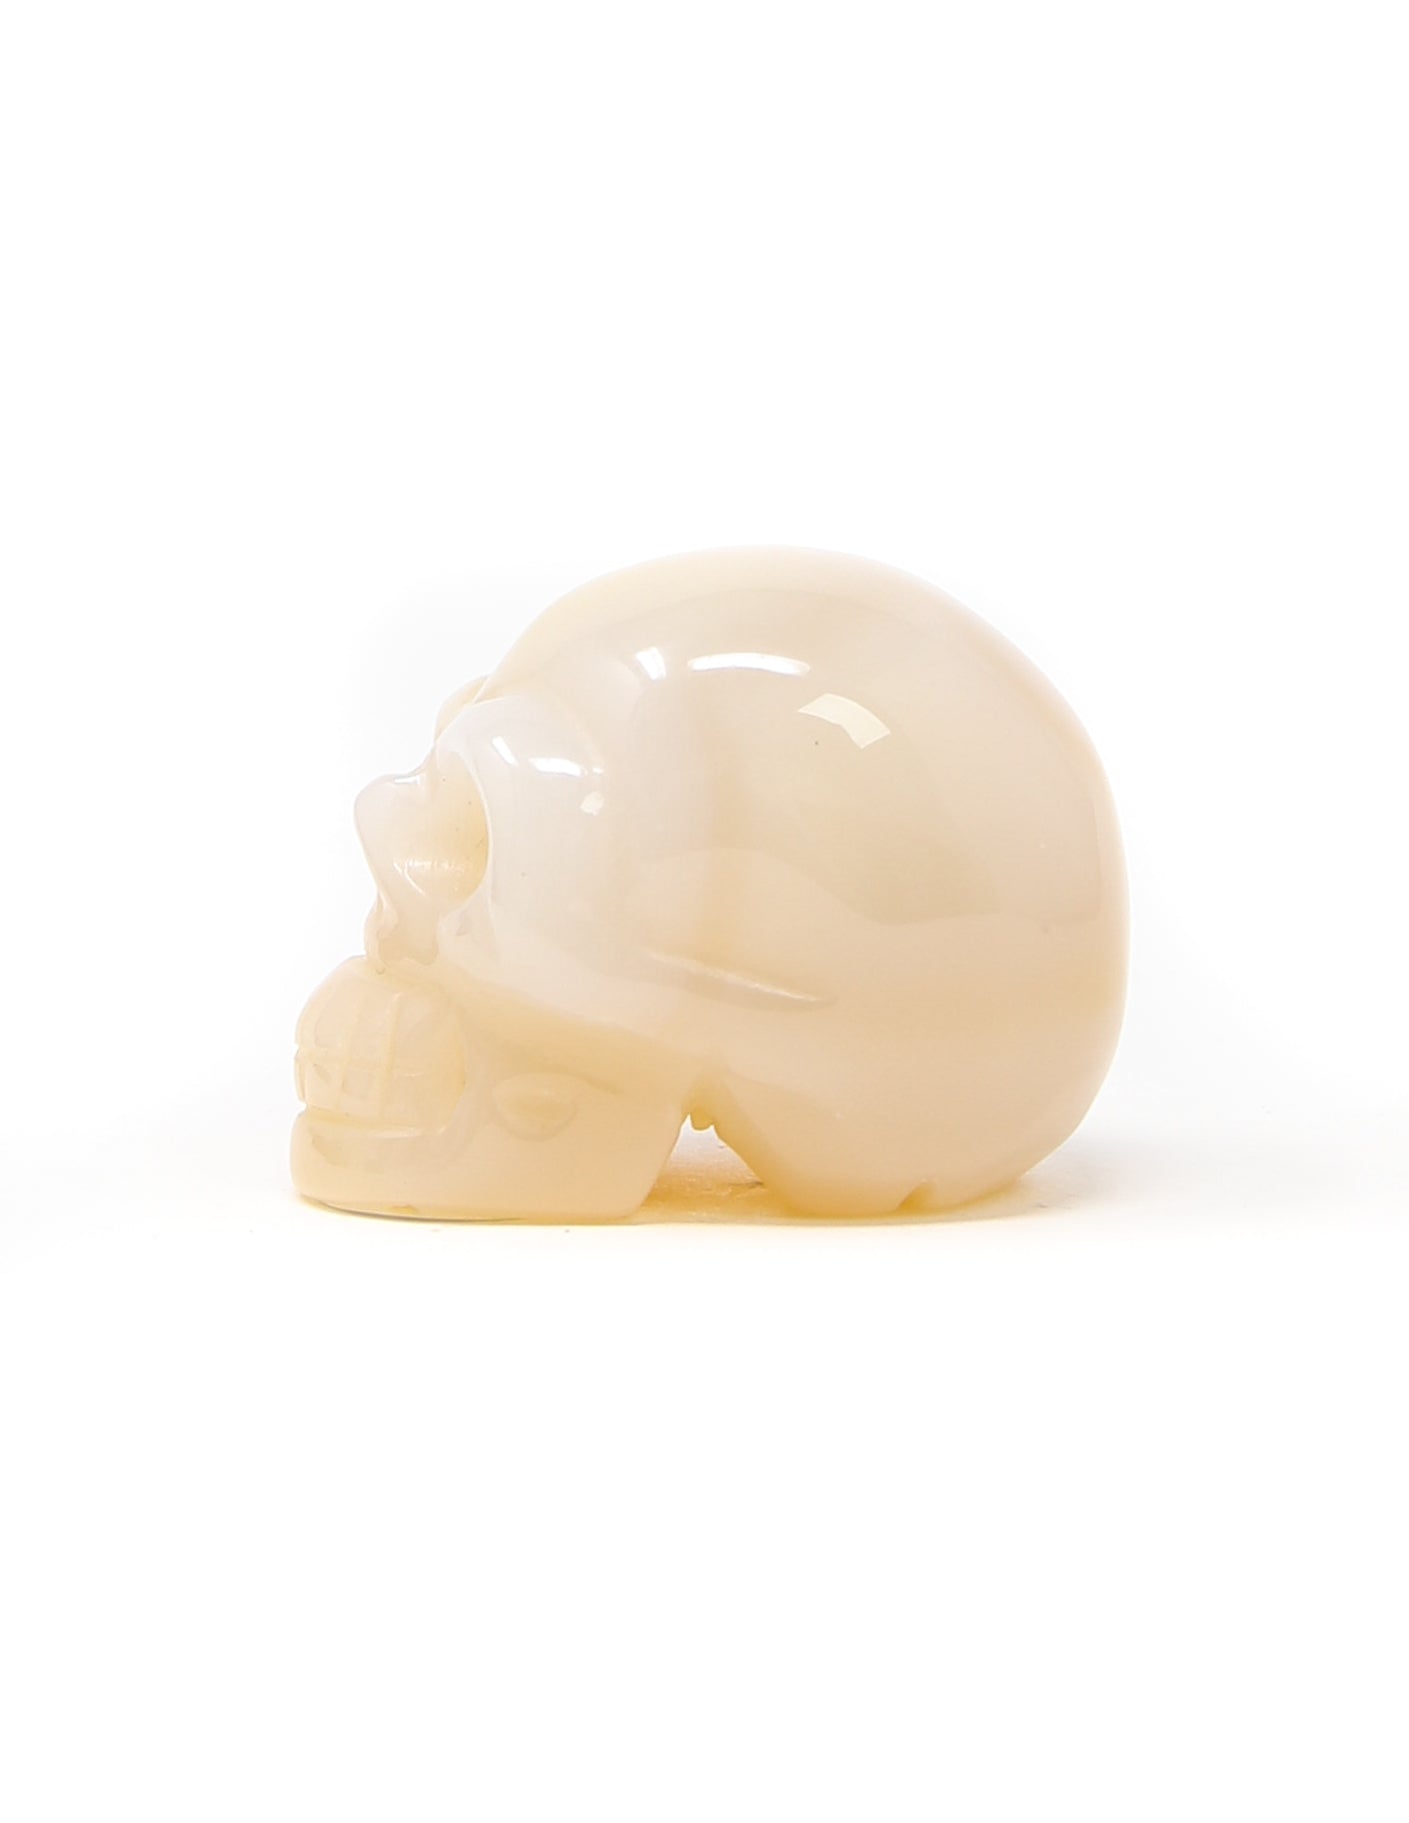 Agate Skull Small